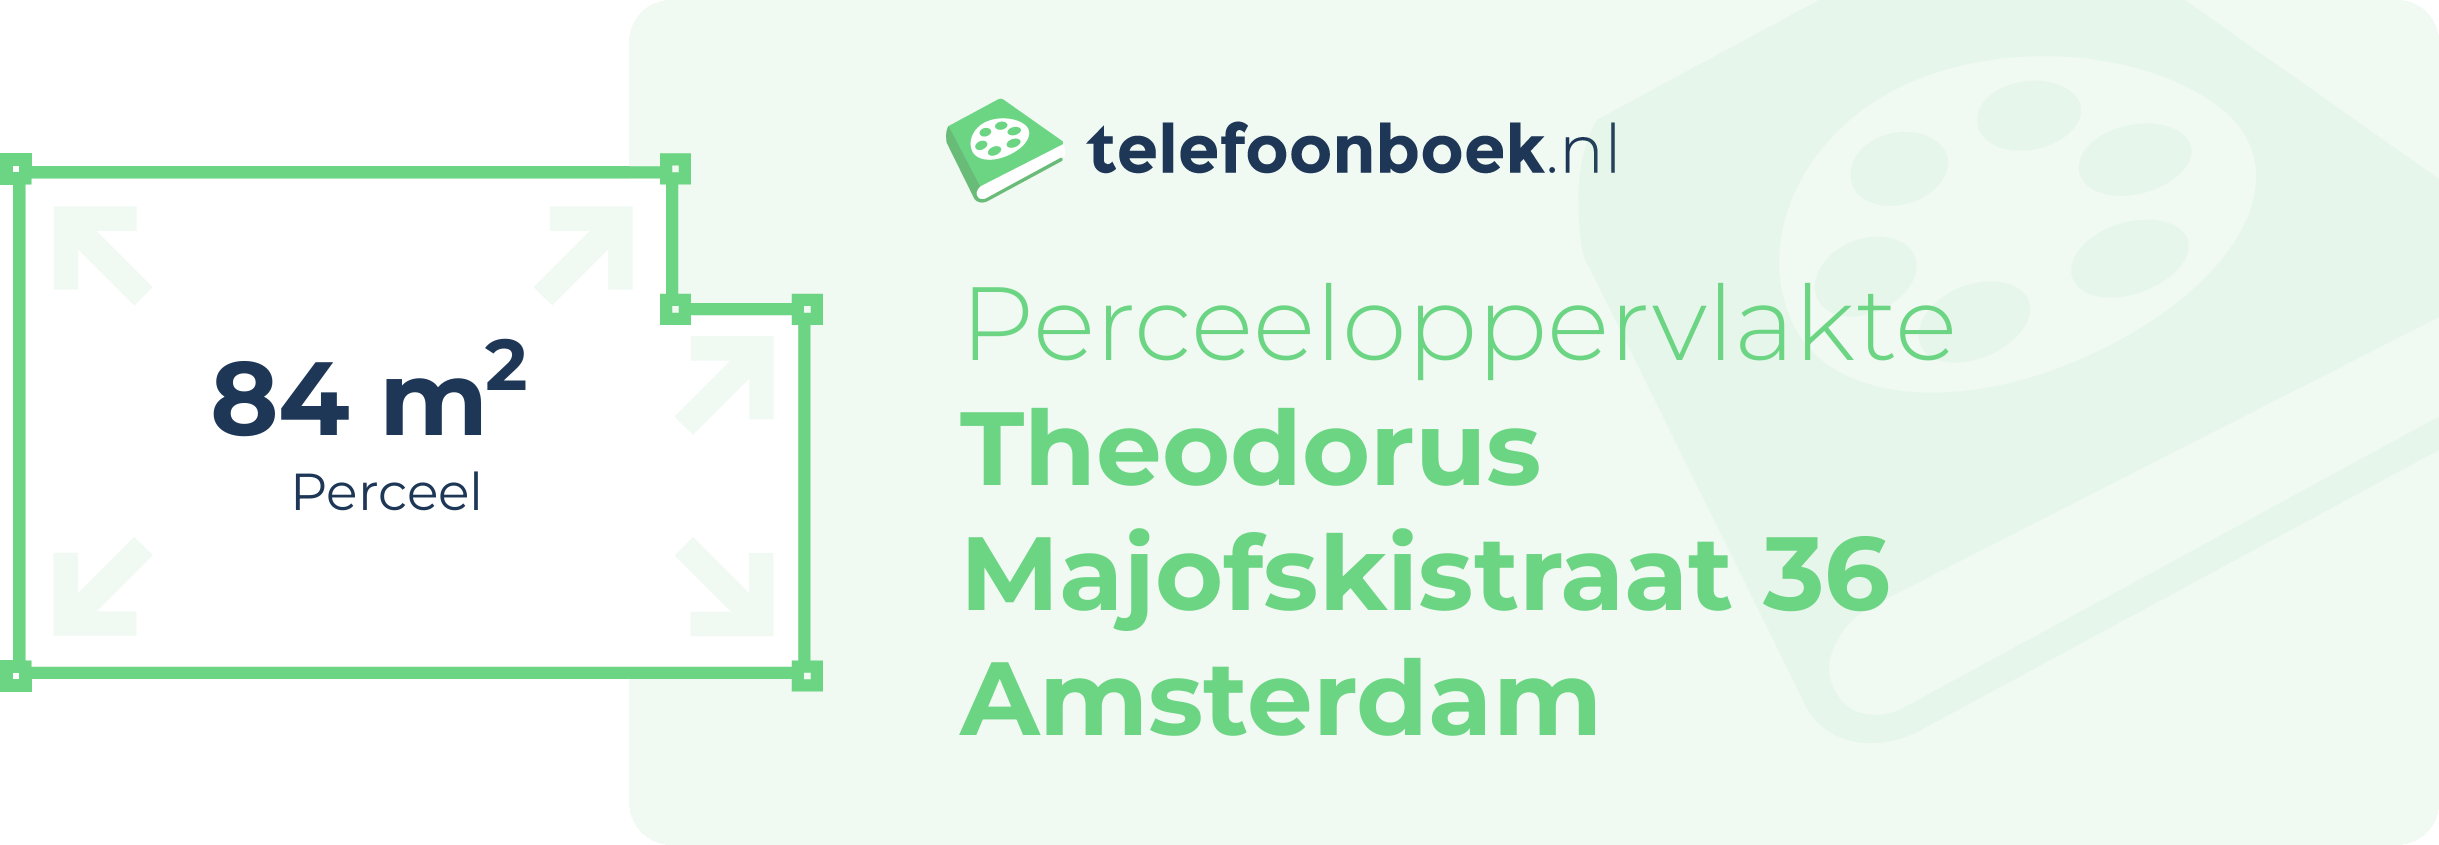 Perceeloppervlakte Theodorus Majofskistraat 36 Amsterdam